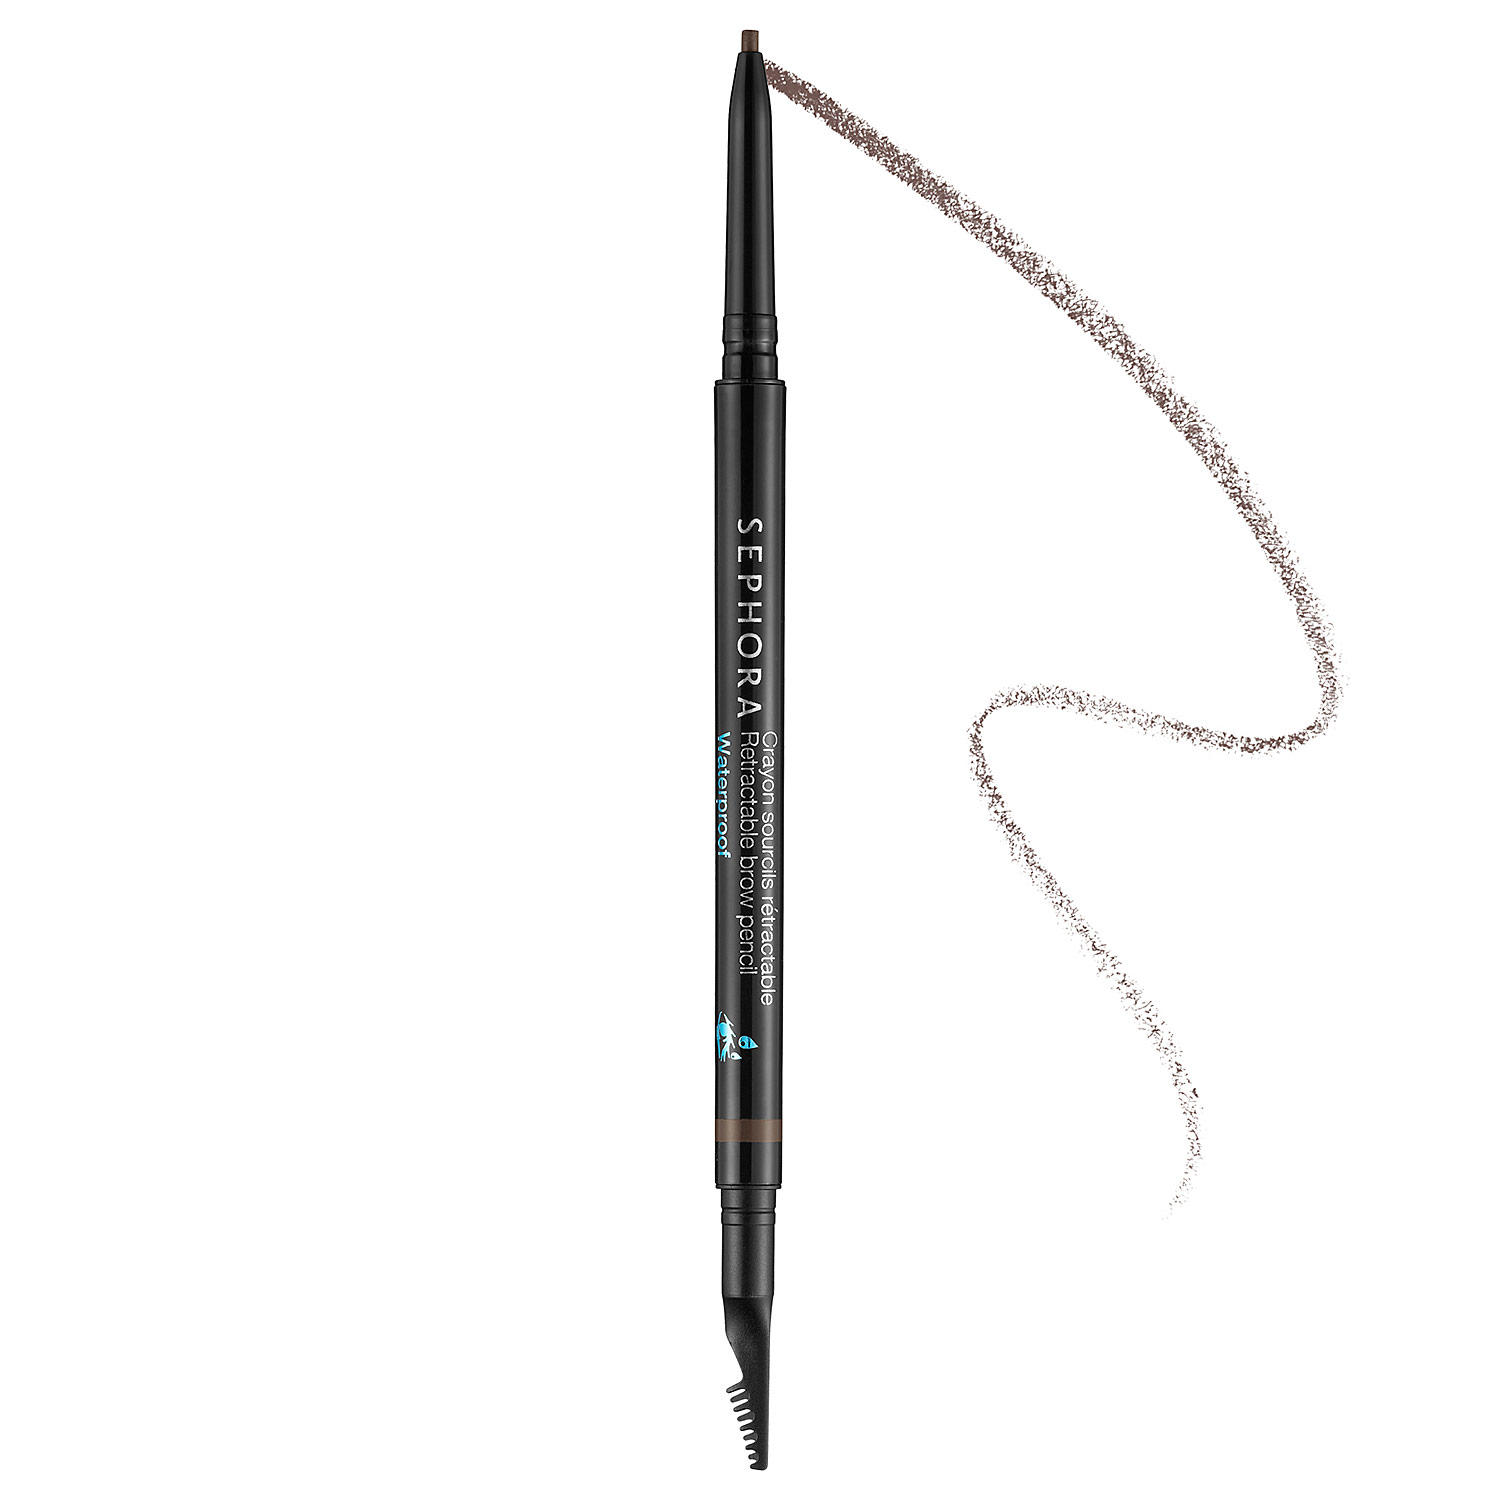 Sephora Retractable Brow Pencil Waterproof Midnight Brown